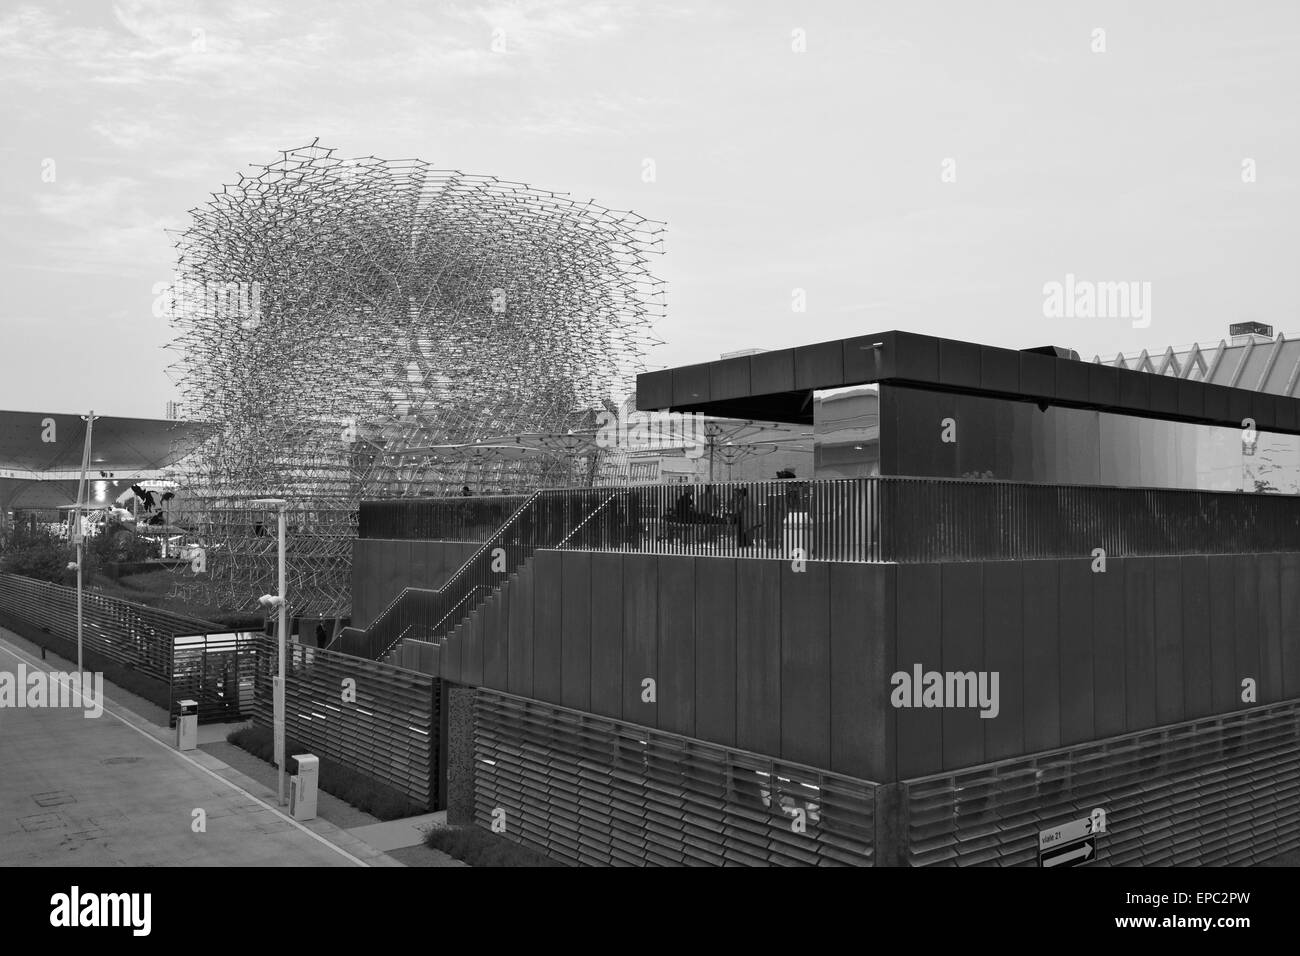 Mailand, Italien, 5. Mai 2015. Der britische Pavillon auf der Expo 2015. Wolfgang Buttress „The Hive“ Uk Expo Pavillon. Stockfoto